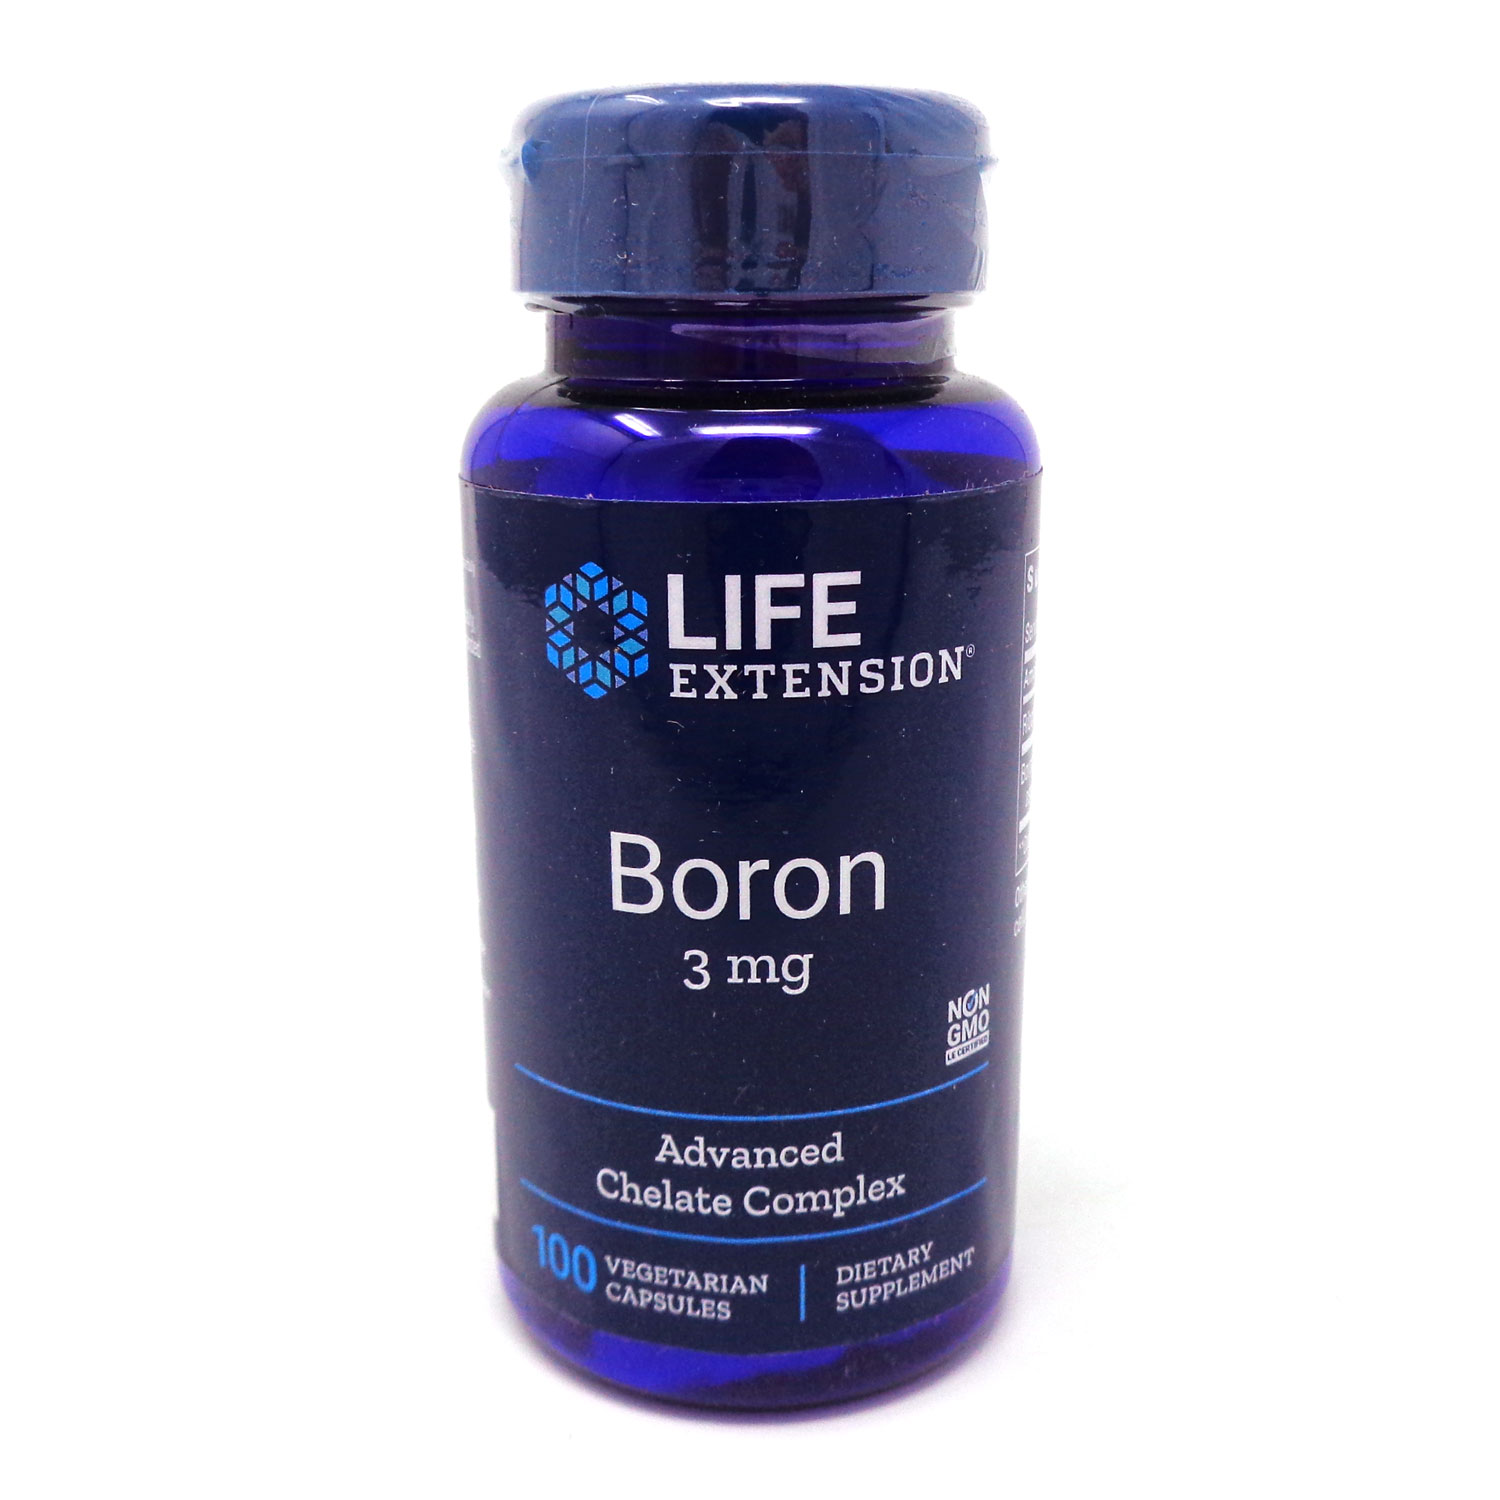 Life Extension Boron 3 mg 100 Veg Caps - image 1 of 2